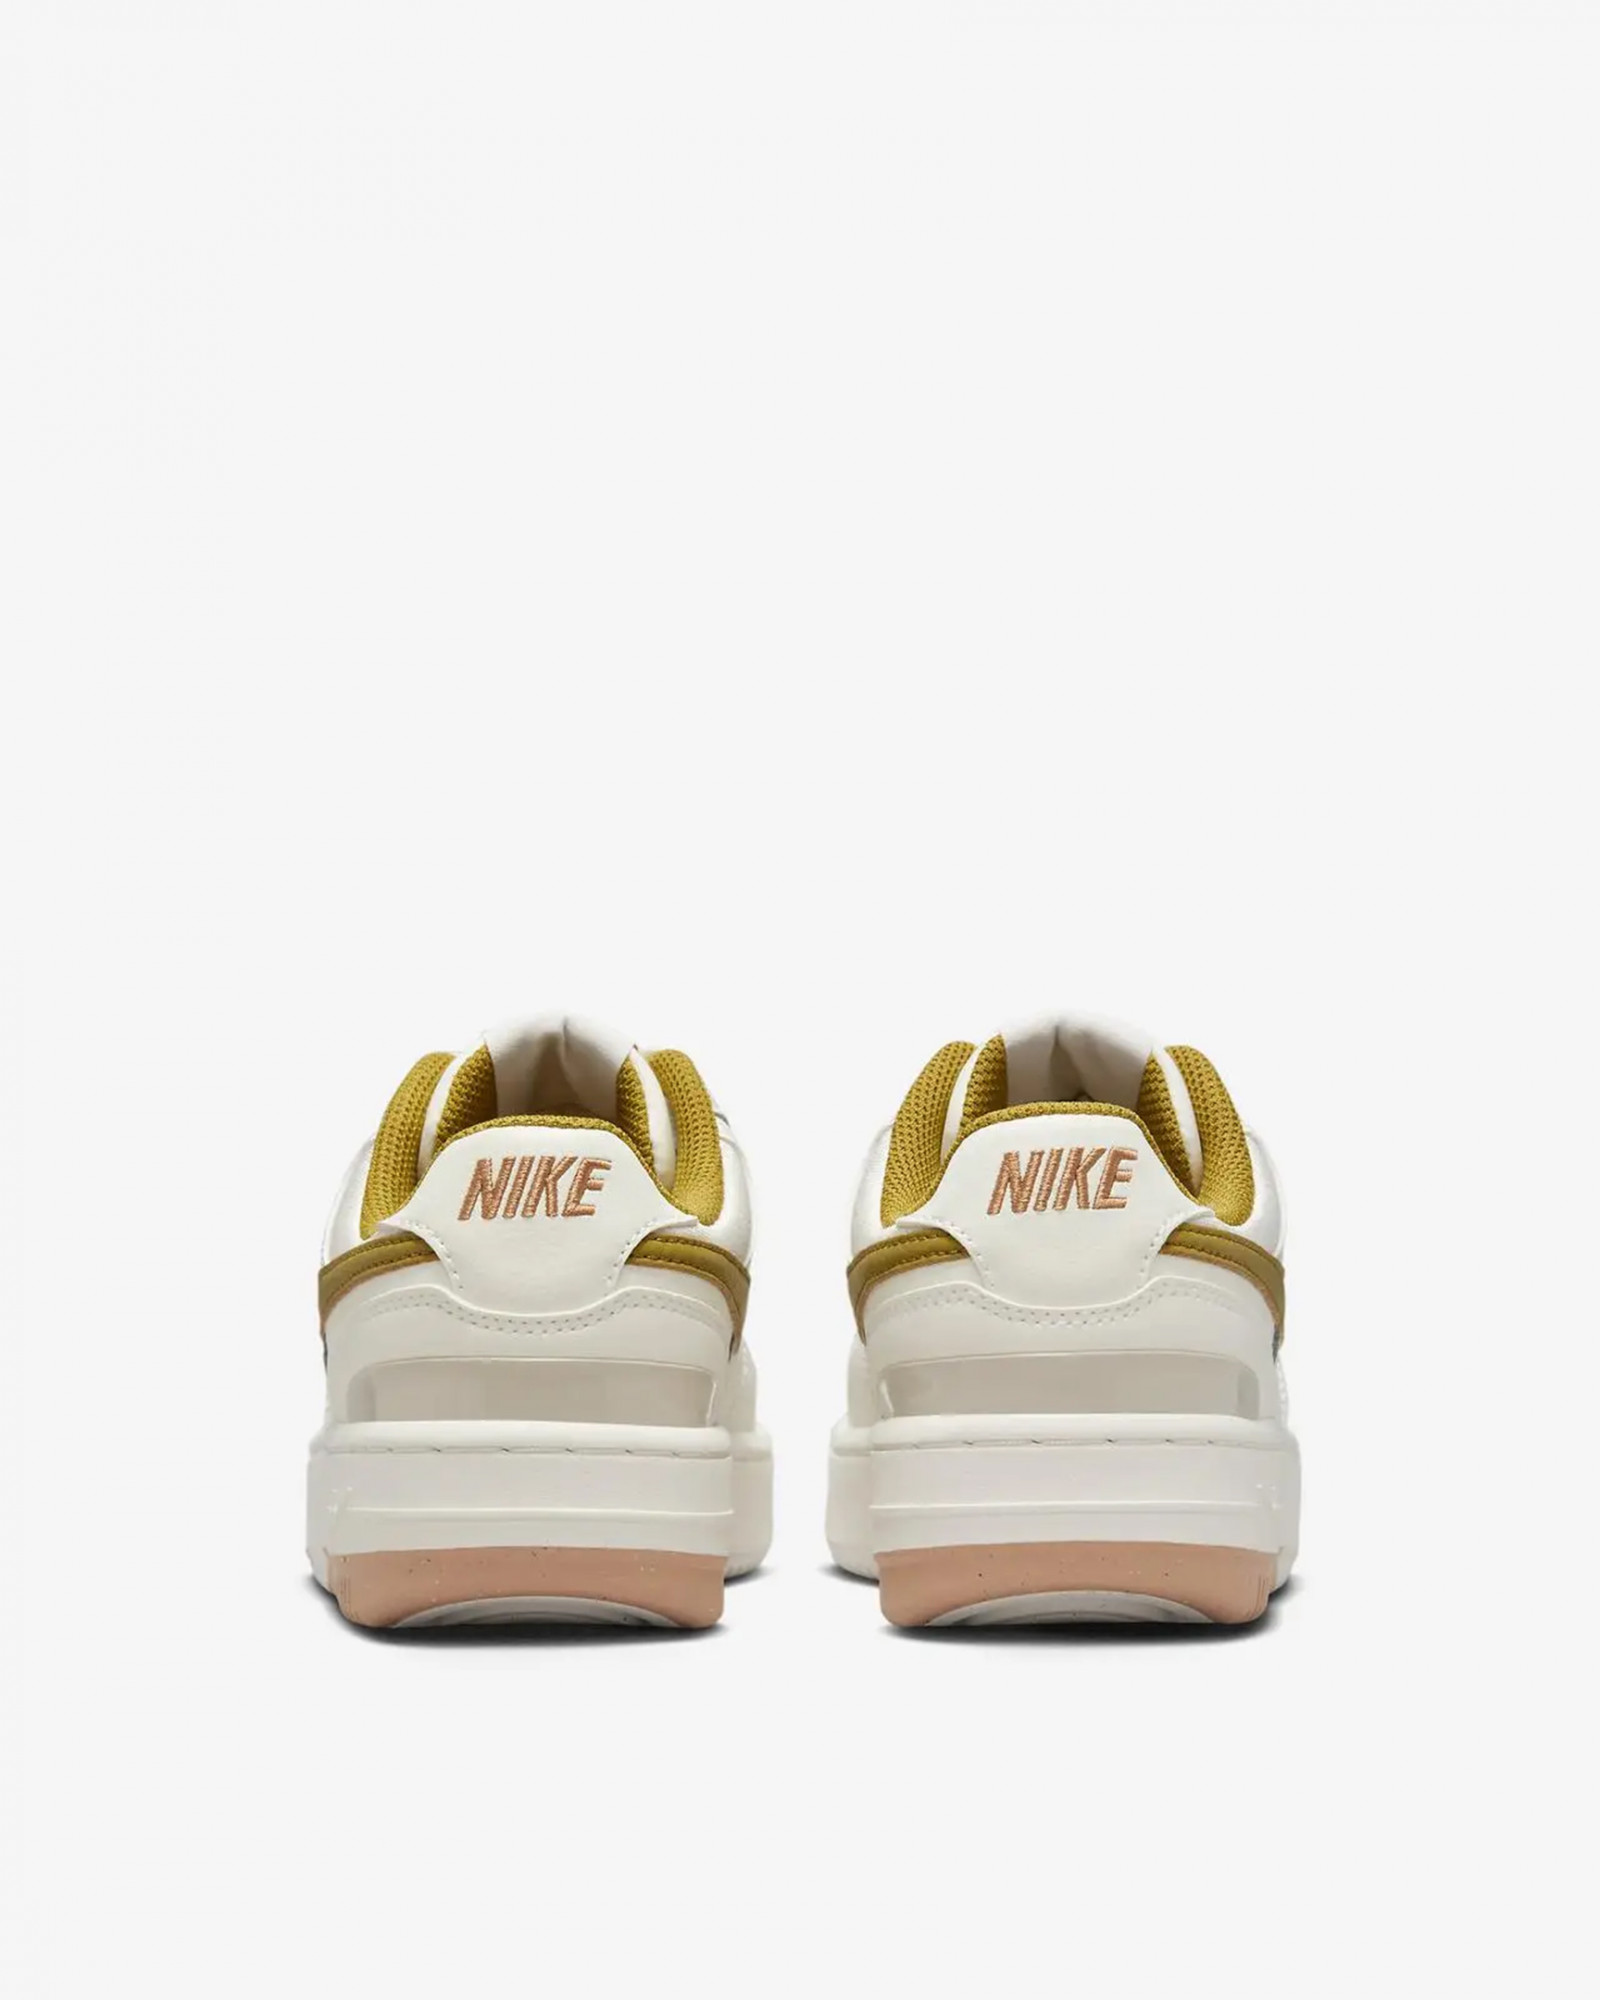 Кроссовки Nike NIKE GAMMA FORCE бежевые DX9176-105 изображение 5